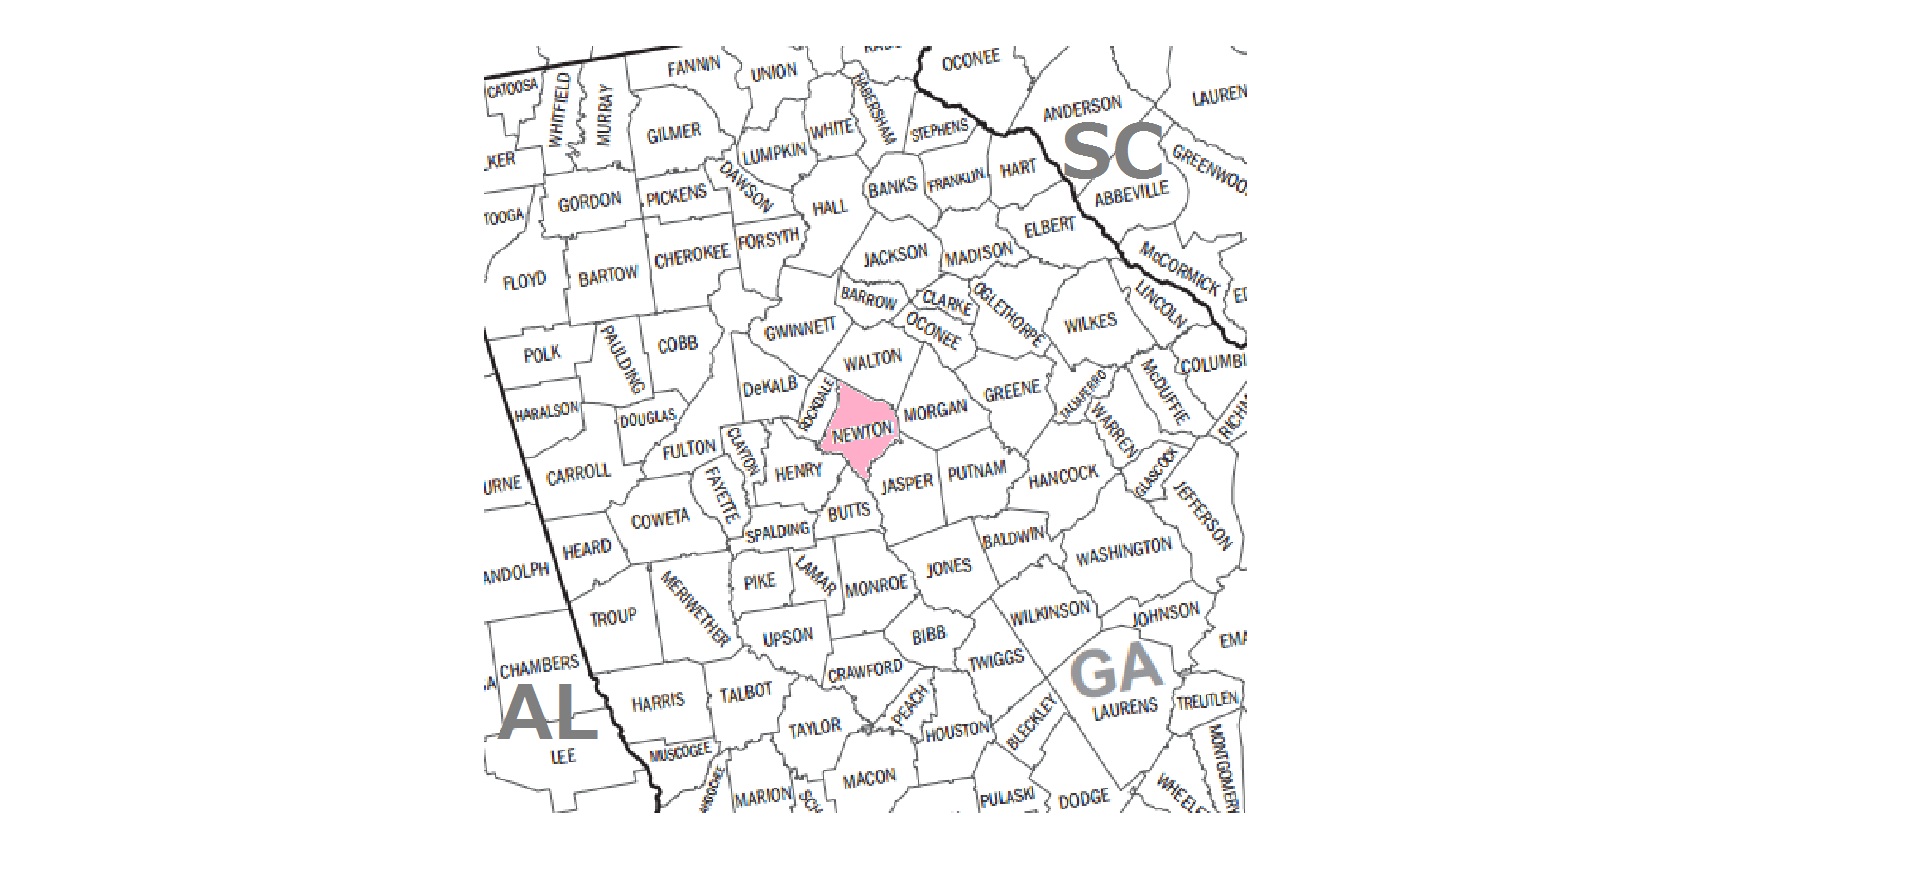 Newton County Georgia Lien and Bond Map